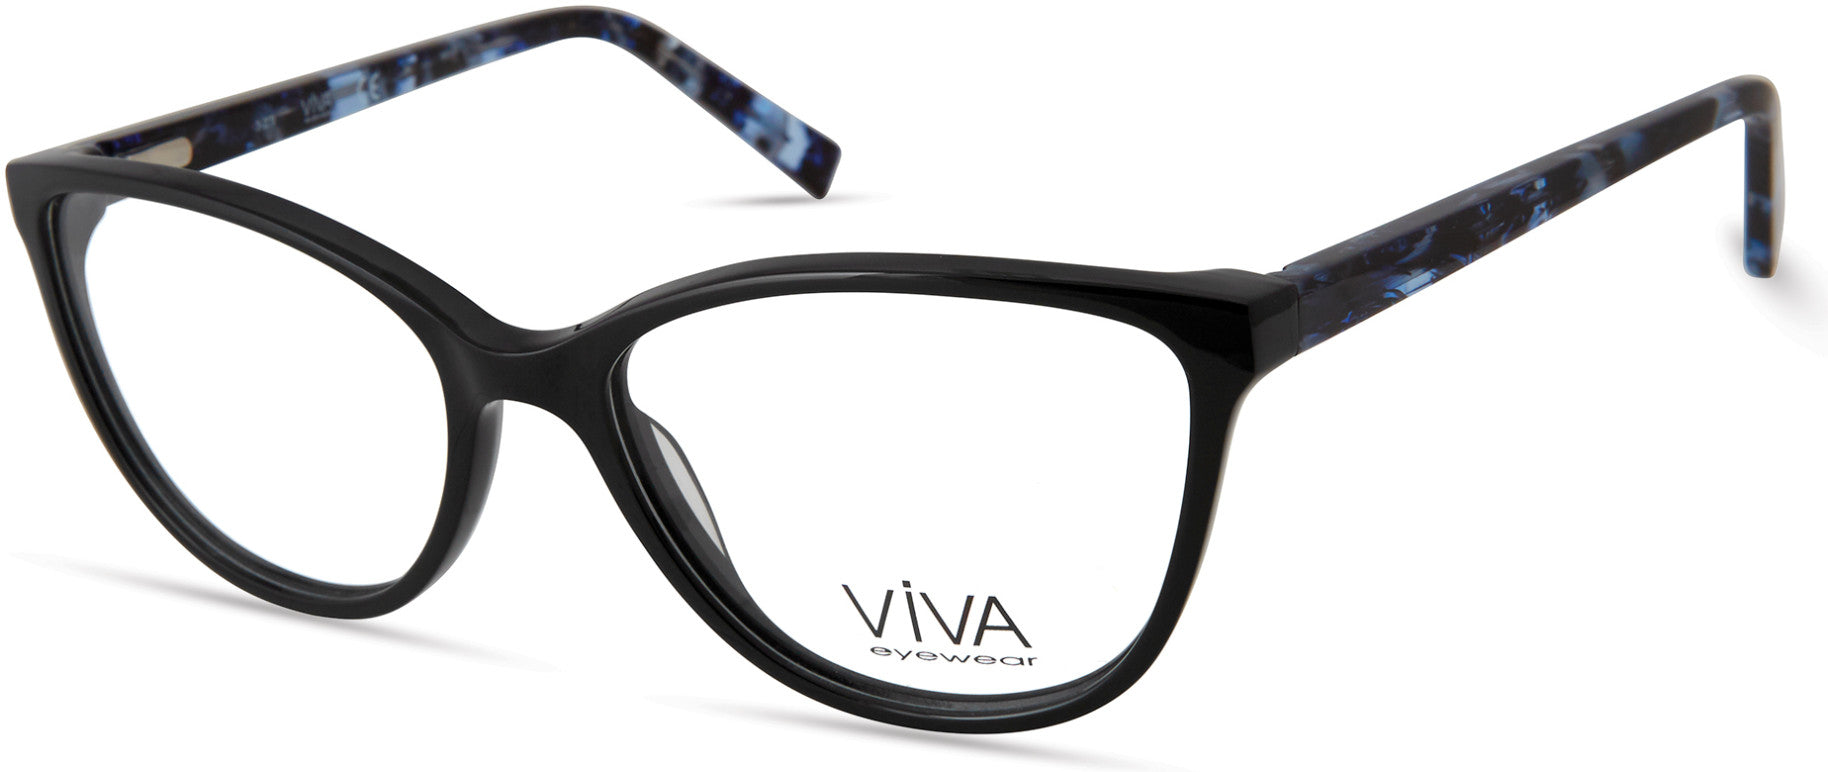 Viva VV4520 Square Eyeglasses 001-001 - Shiny Black